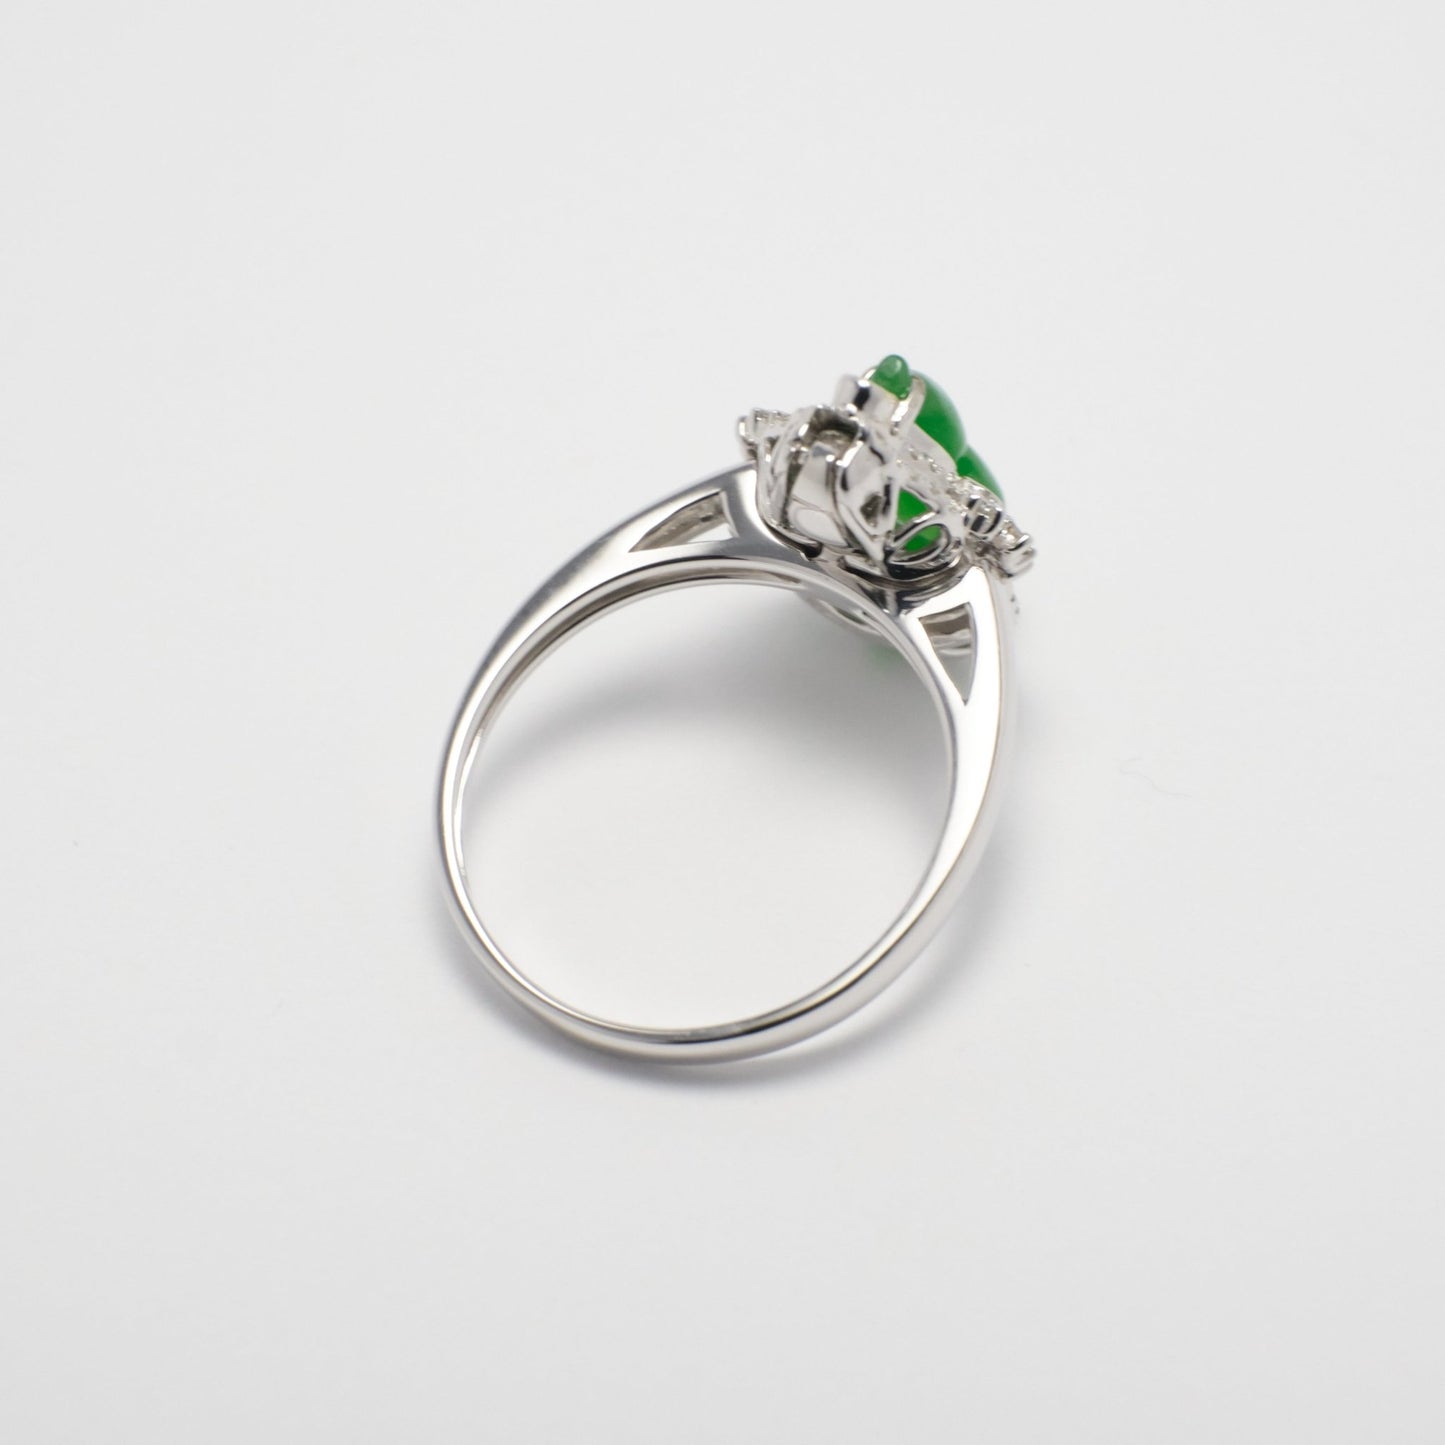 Ring - 18K白金緬甸老坑鮮綠葫蘆形天然翡翠配鑽石吊墜兩用戒指 - 雅玉珠寶